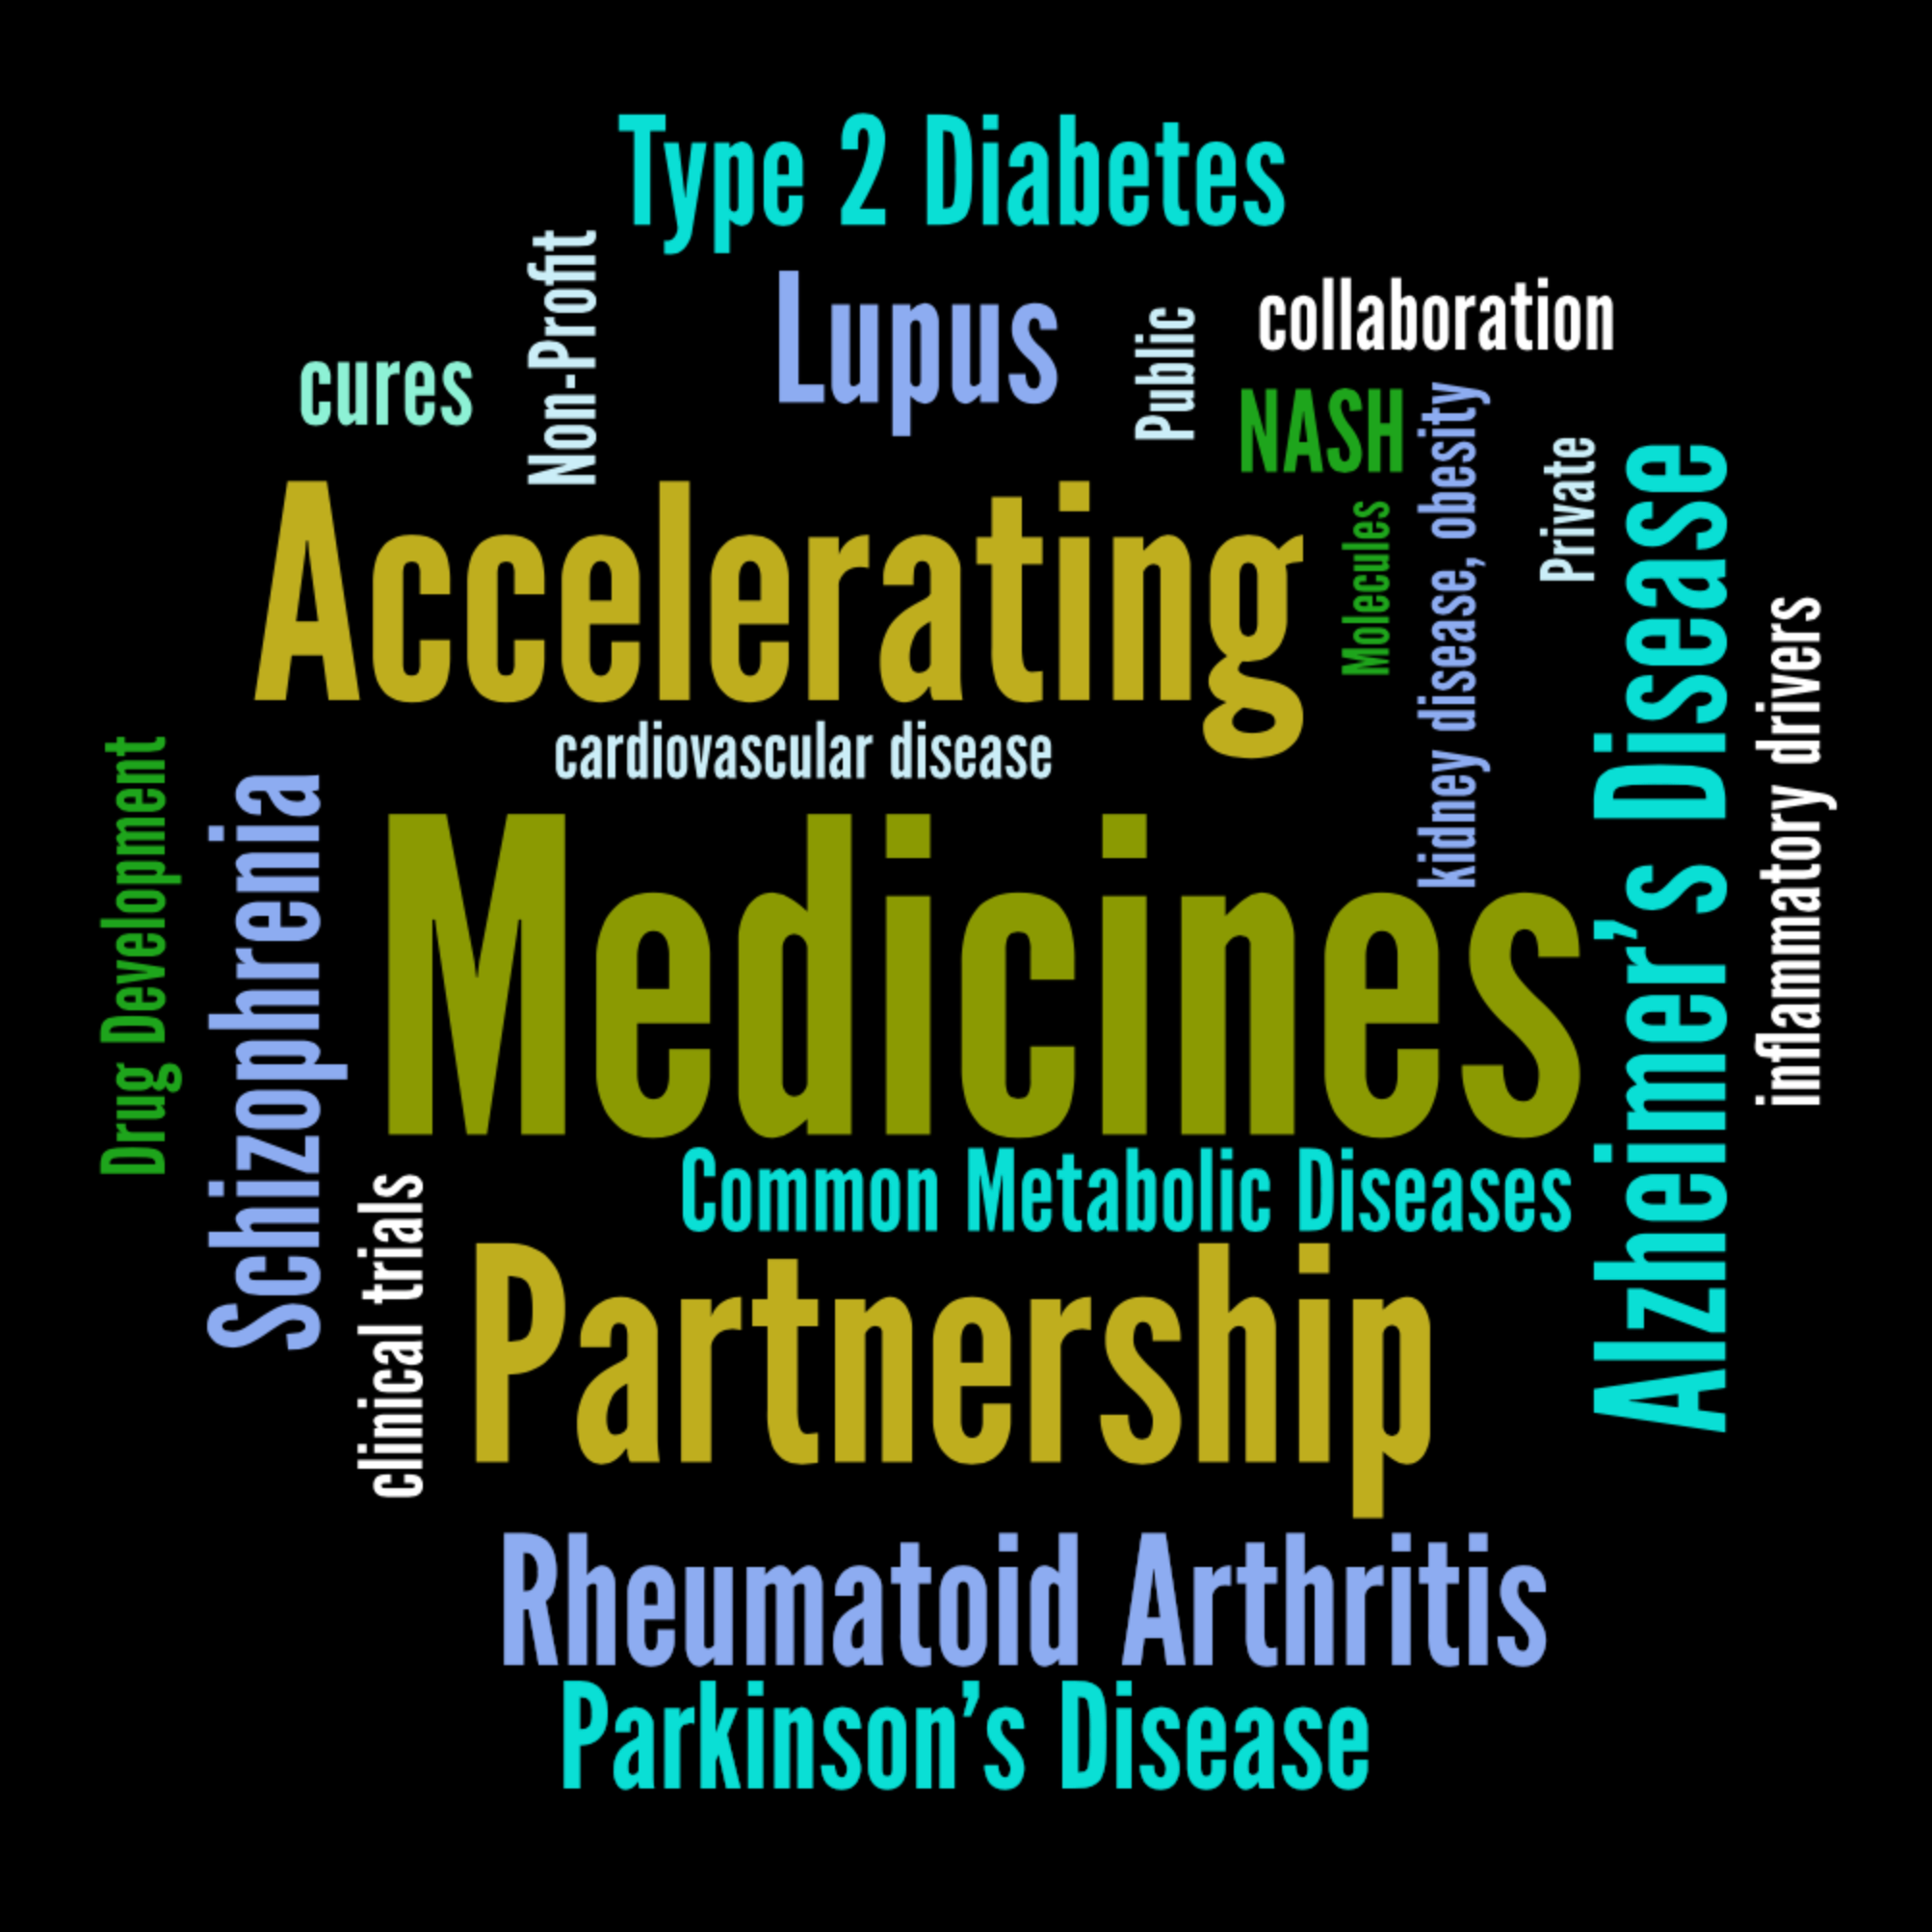 Accelerating Medicines Partnership Word Cloud